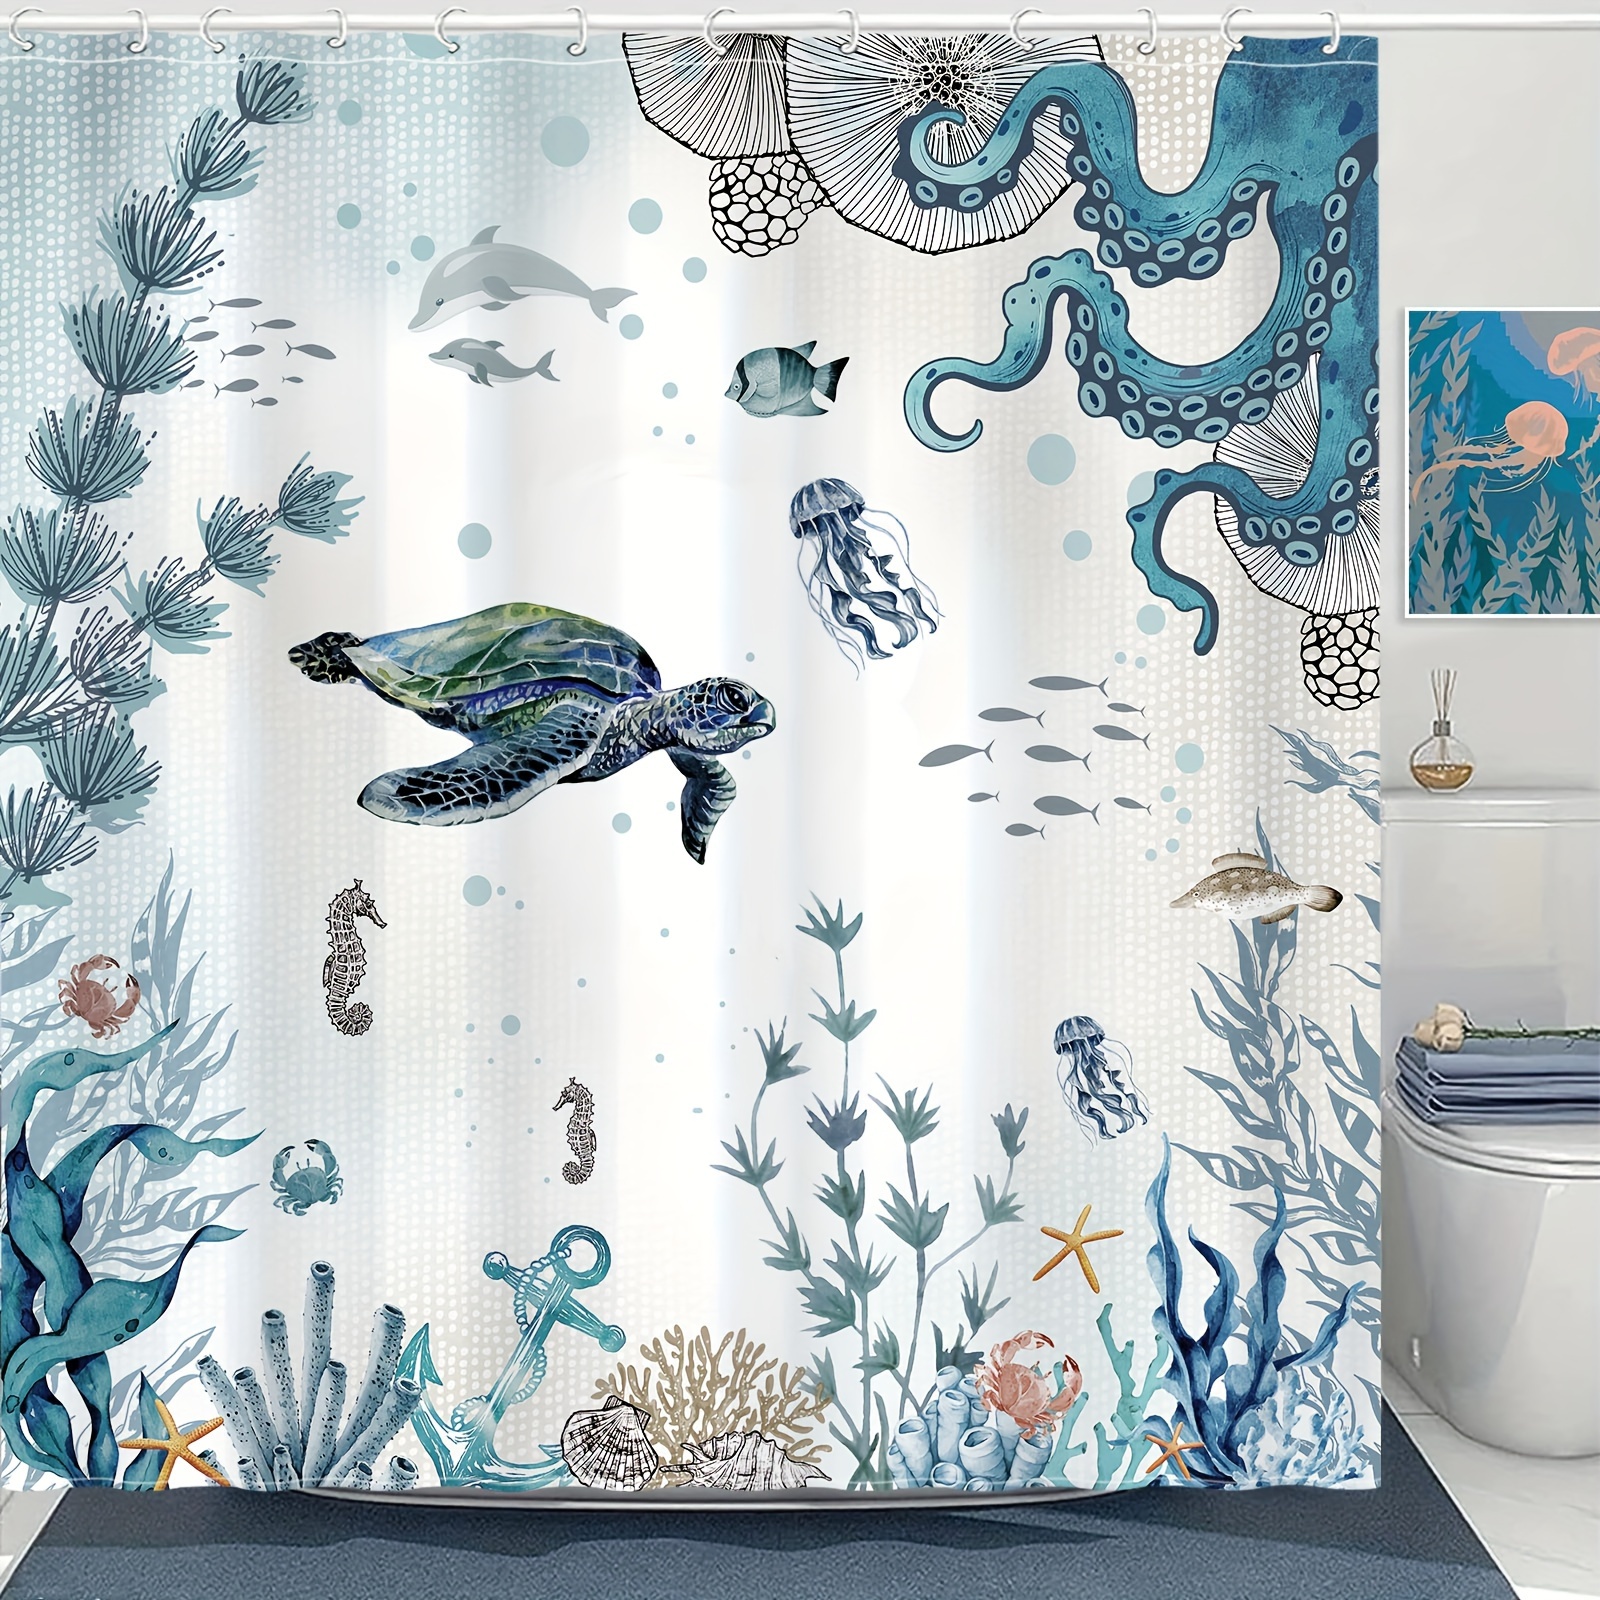 

Sea Turtle Octopus Shower Curtain Set Blue Teal Waterproof Fabric Bathroom Shower Curtains Fish Ocean Animal Seashell Jellyfish Theme Bath Curtain With Hooks